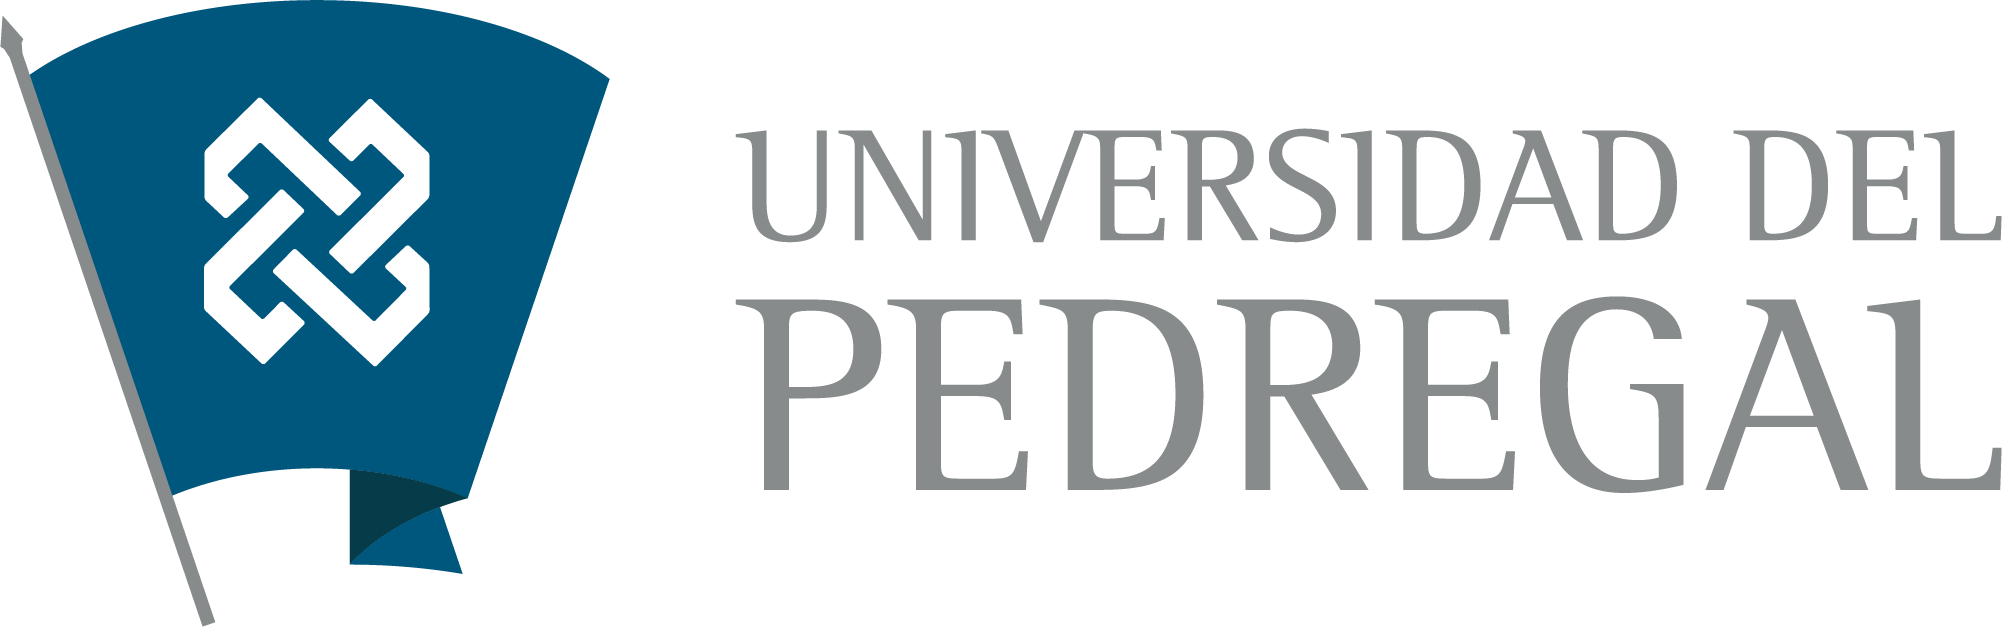 Universidad del Pedregal - Revista Juventud'es